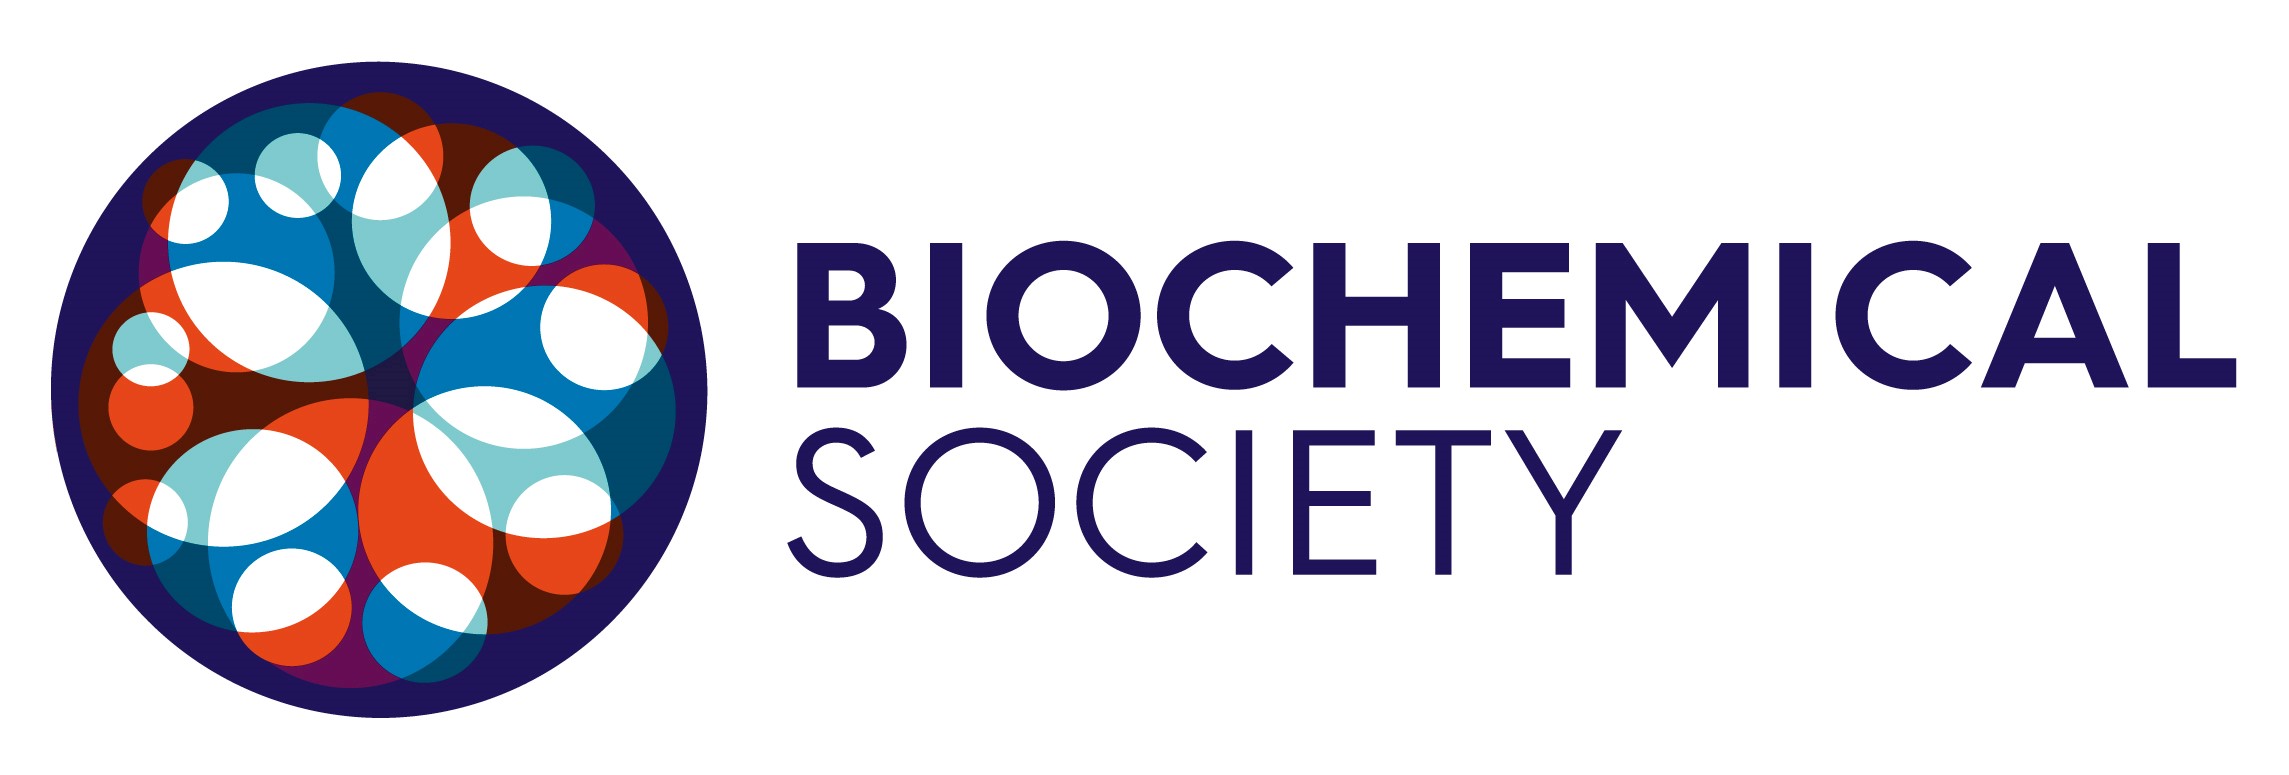 Biochemical society.jpg